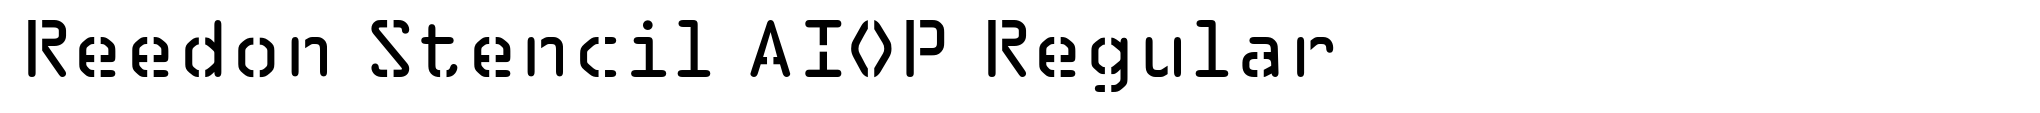 Reedon Stencil AIOP Regular image